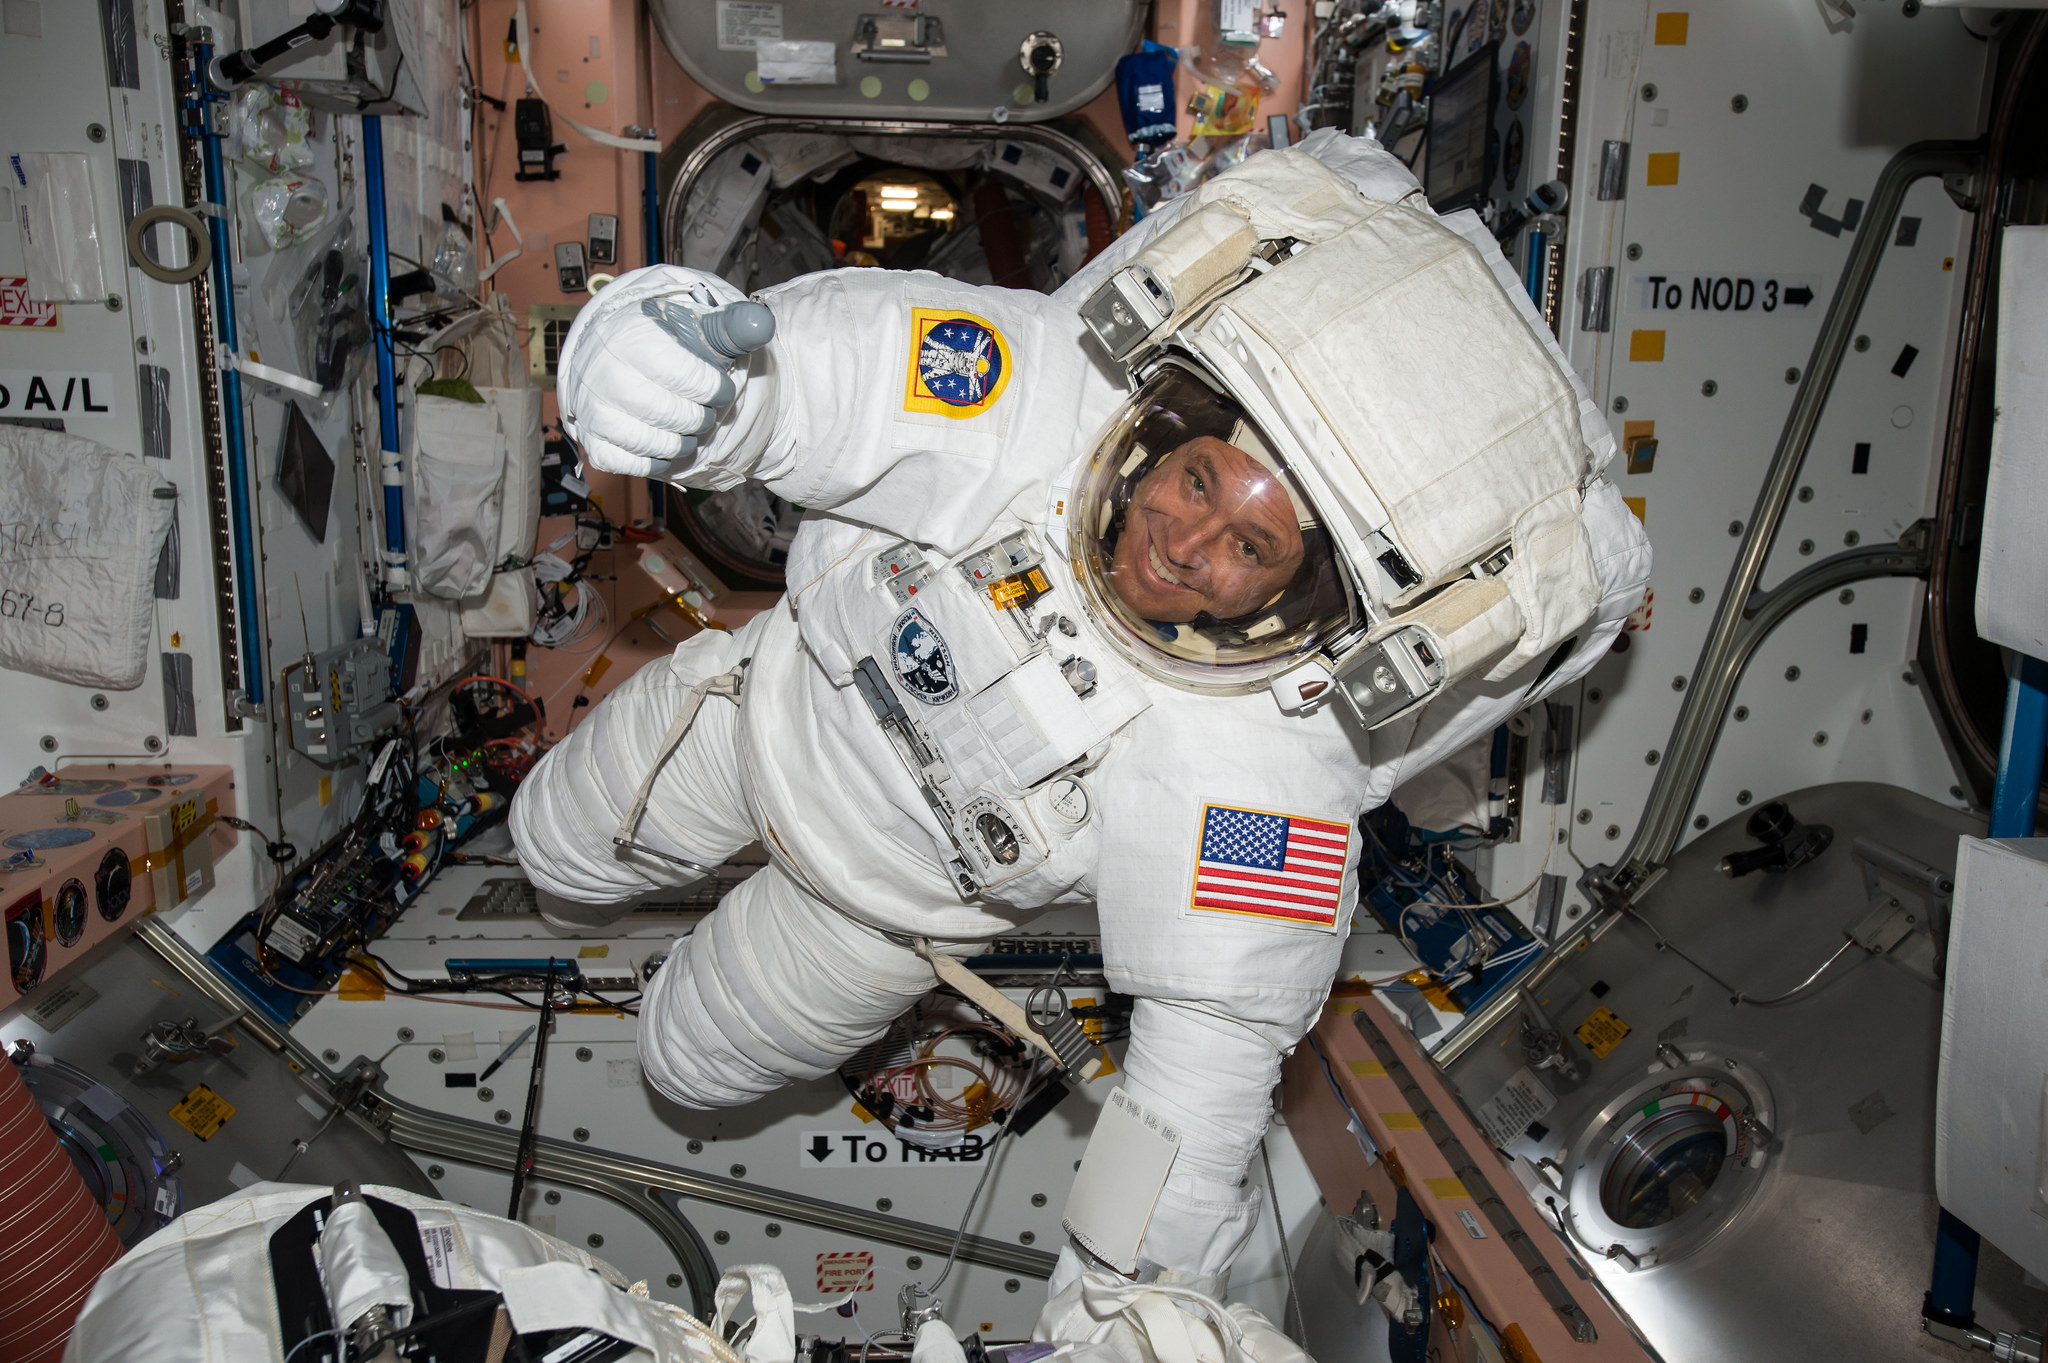 Is astronaut still a job?